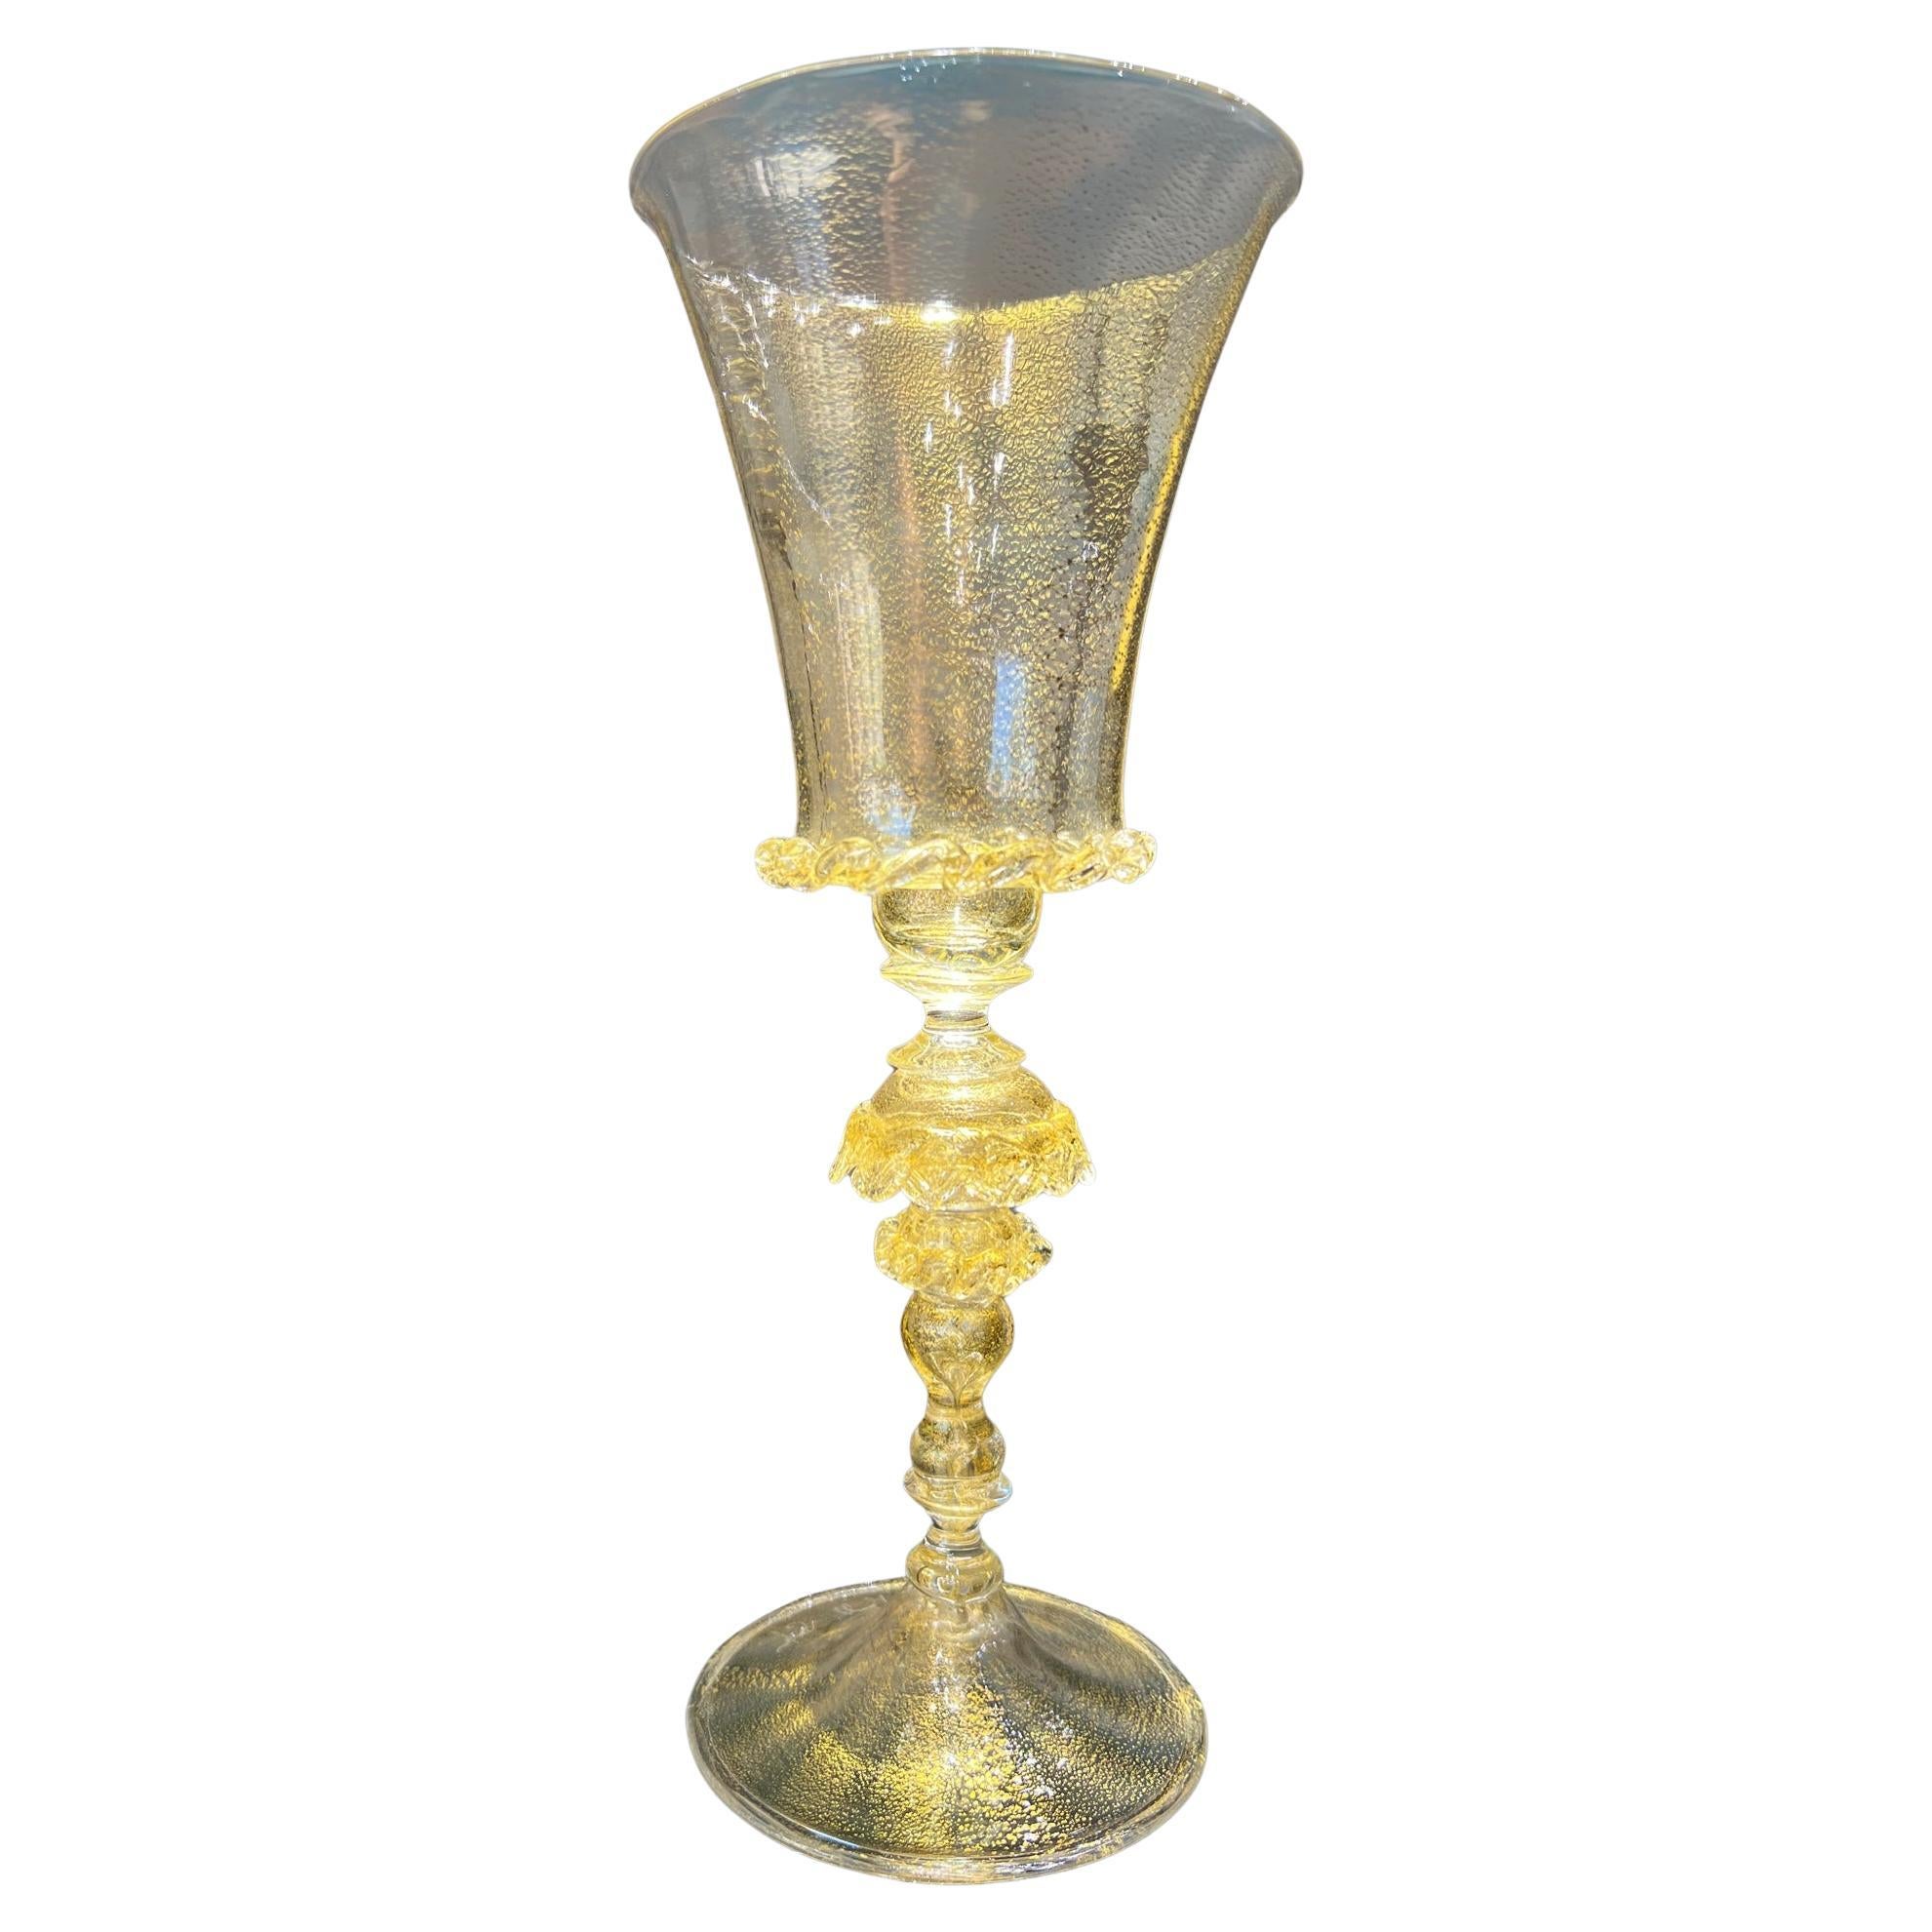 1295 Murano Goblet mundgeblasenes 24kt Blattgold-Blattgold-Zertifikat der Herkunft